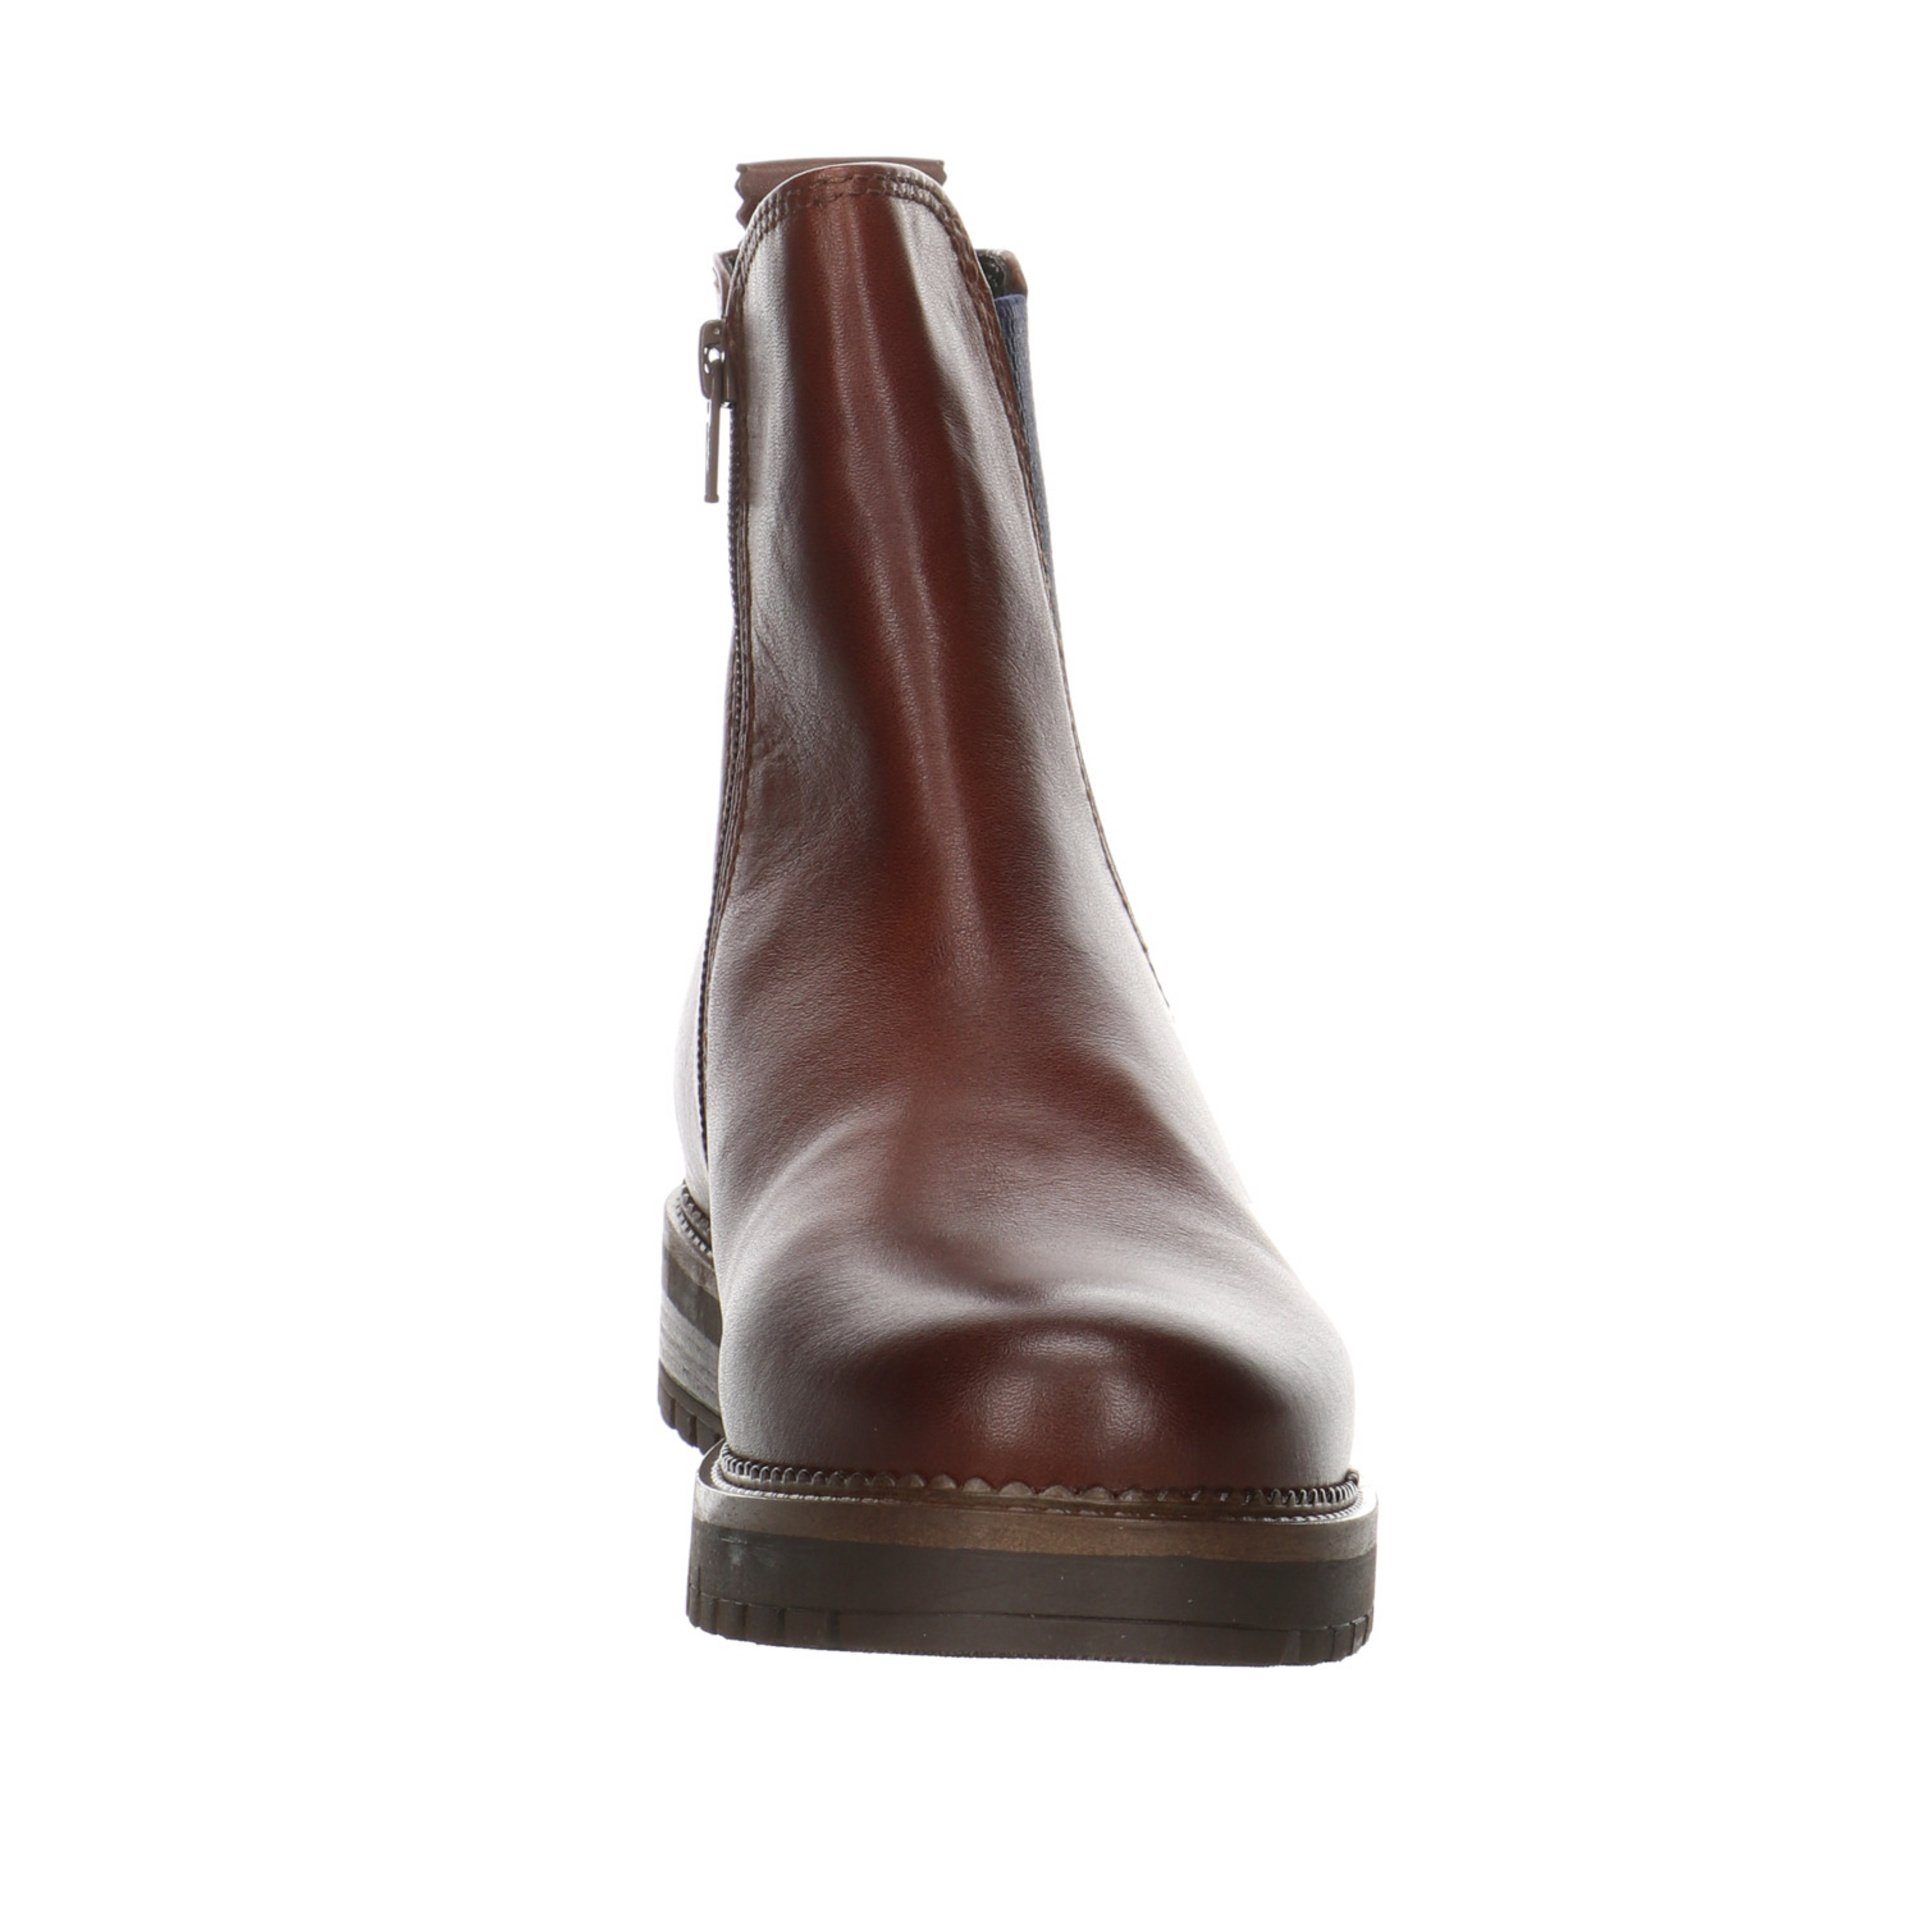 Gabor Damen Stiefel Leder-/Textilkombination sattel Boots Chelsea Stiefel (river) Schuhe